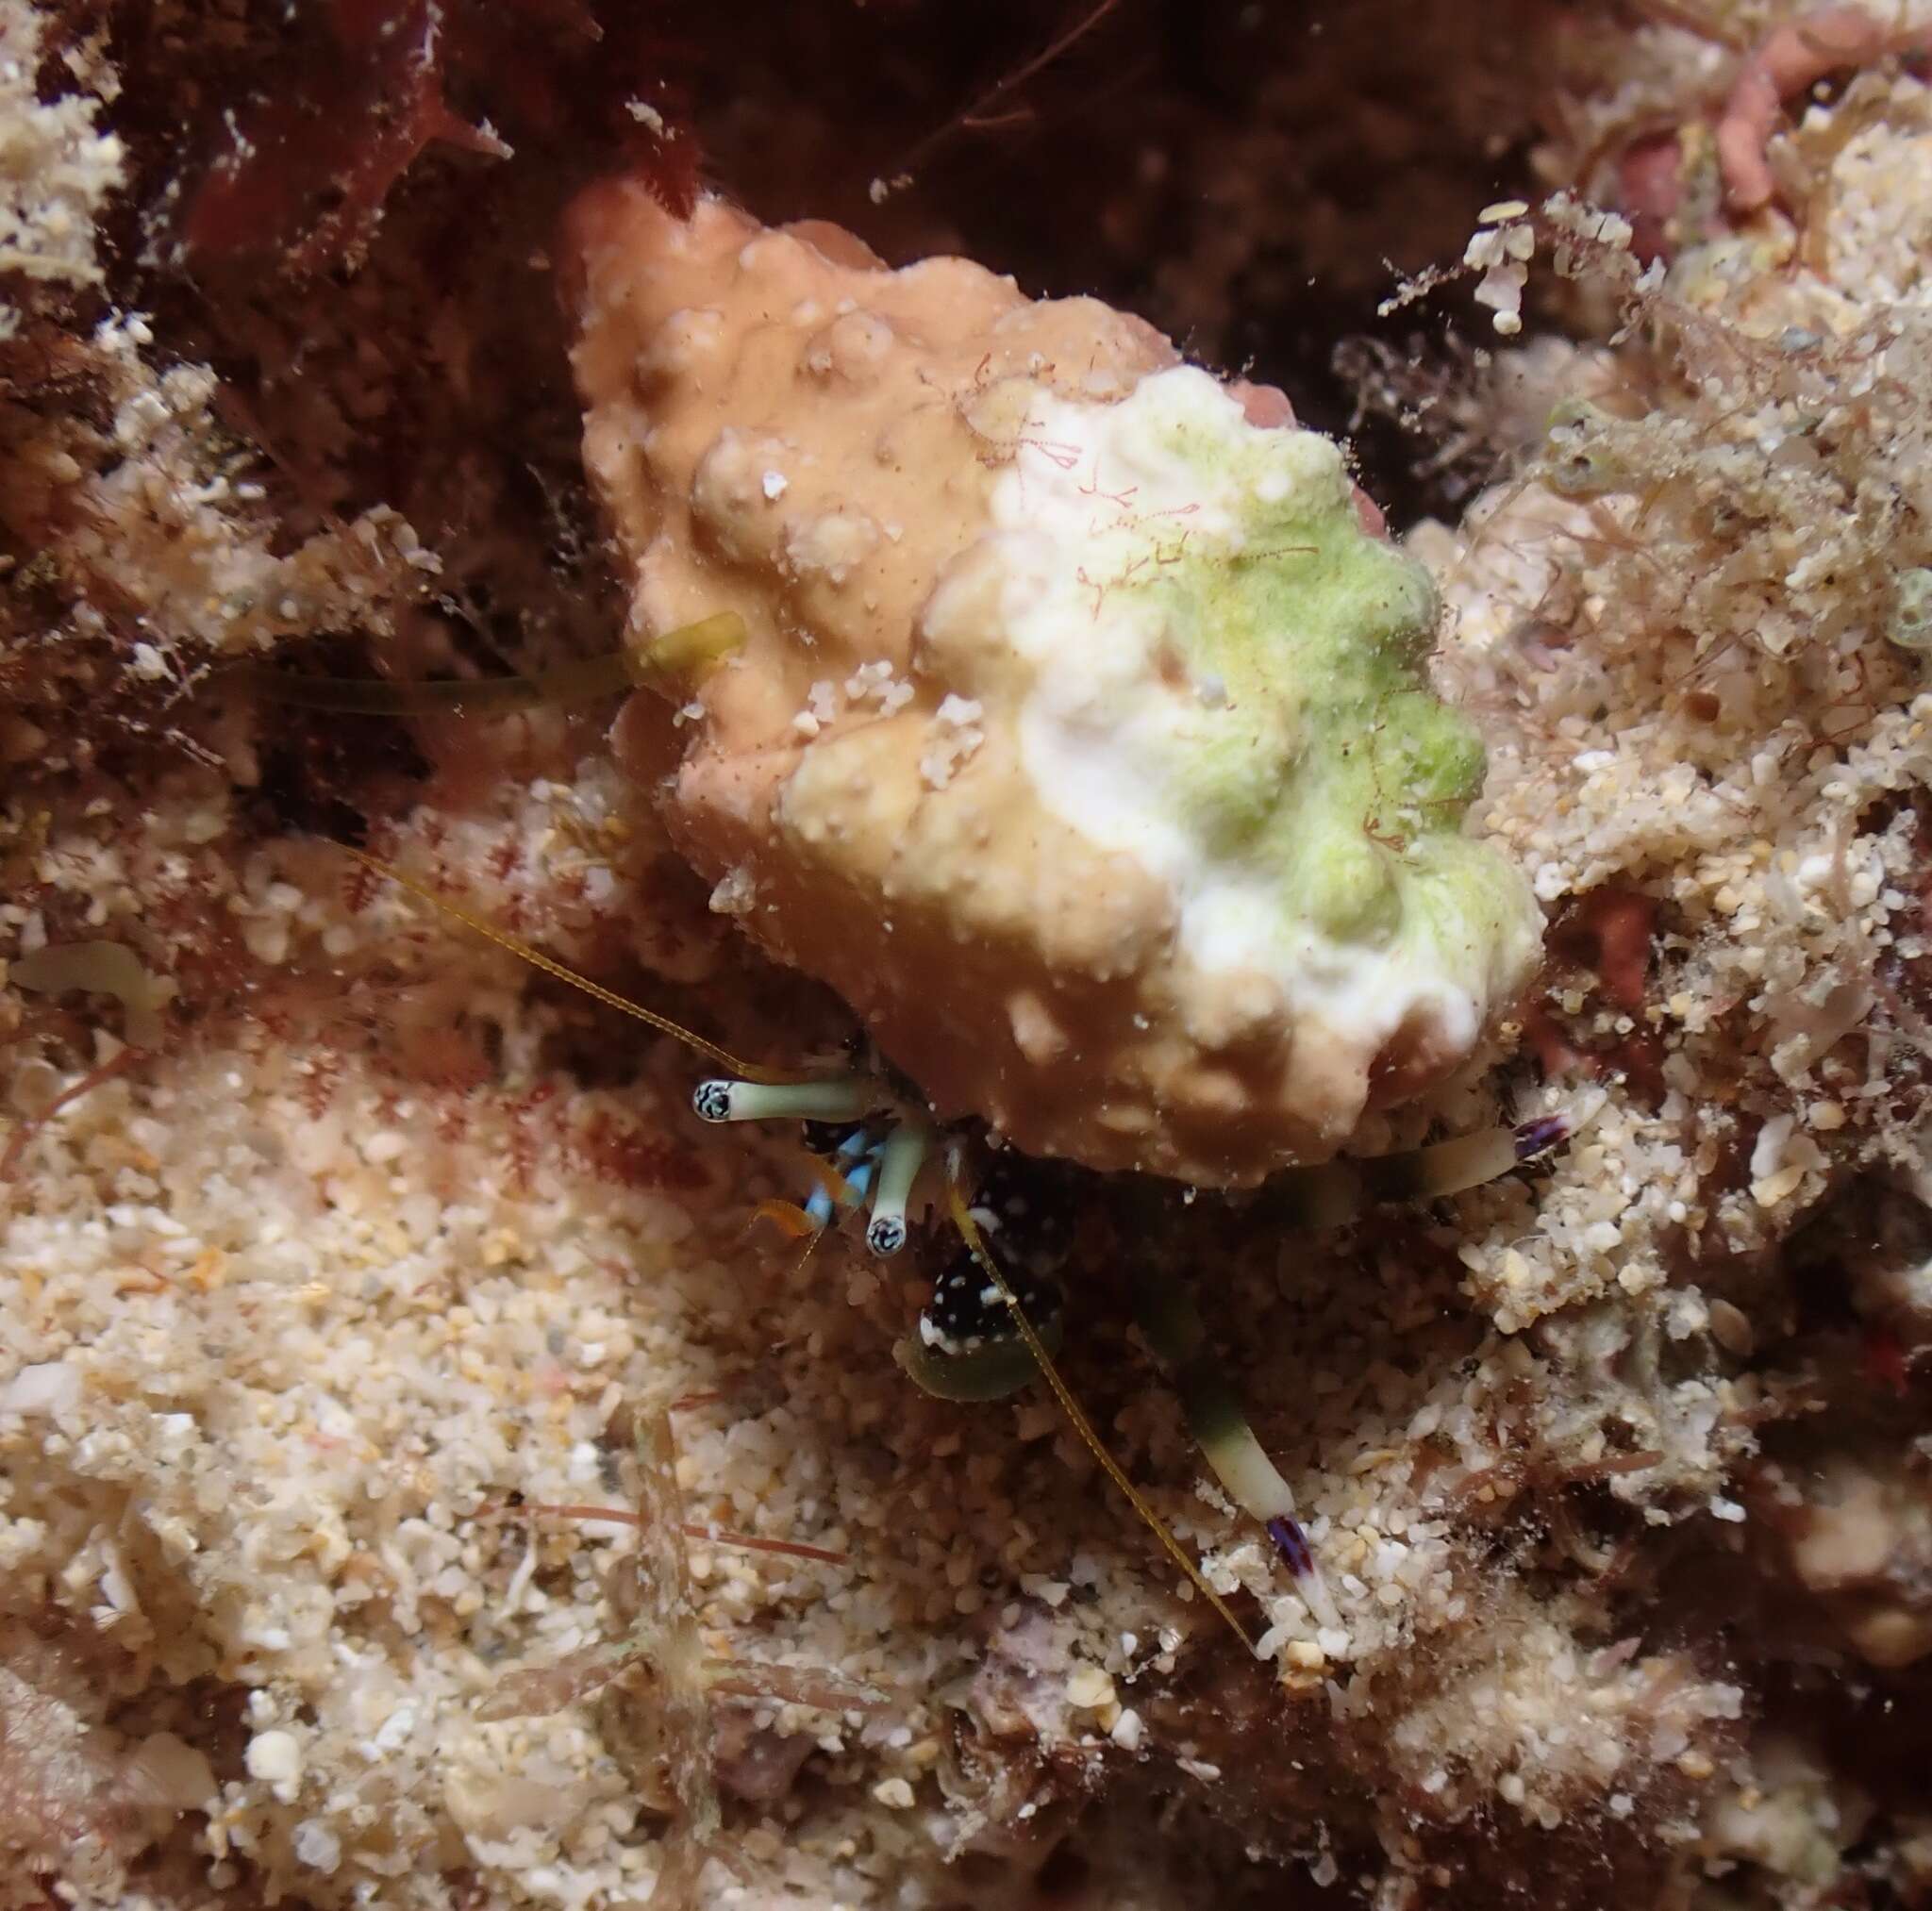 Image of green hermit crab